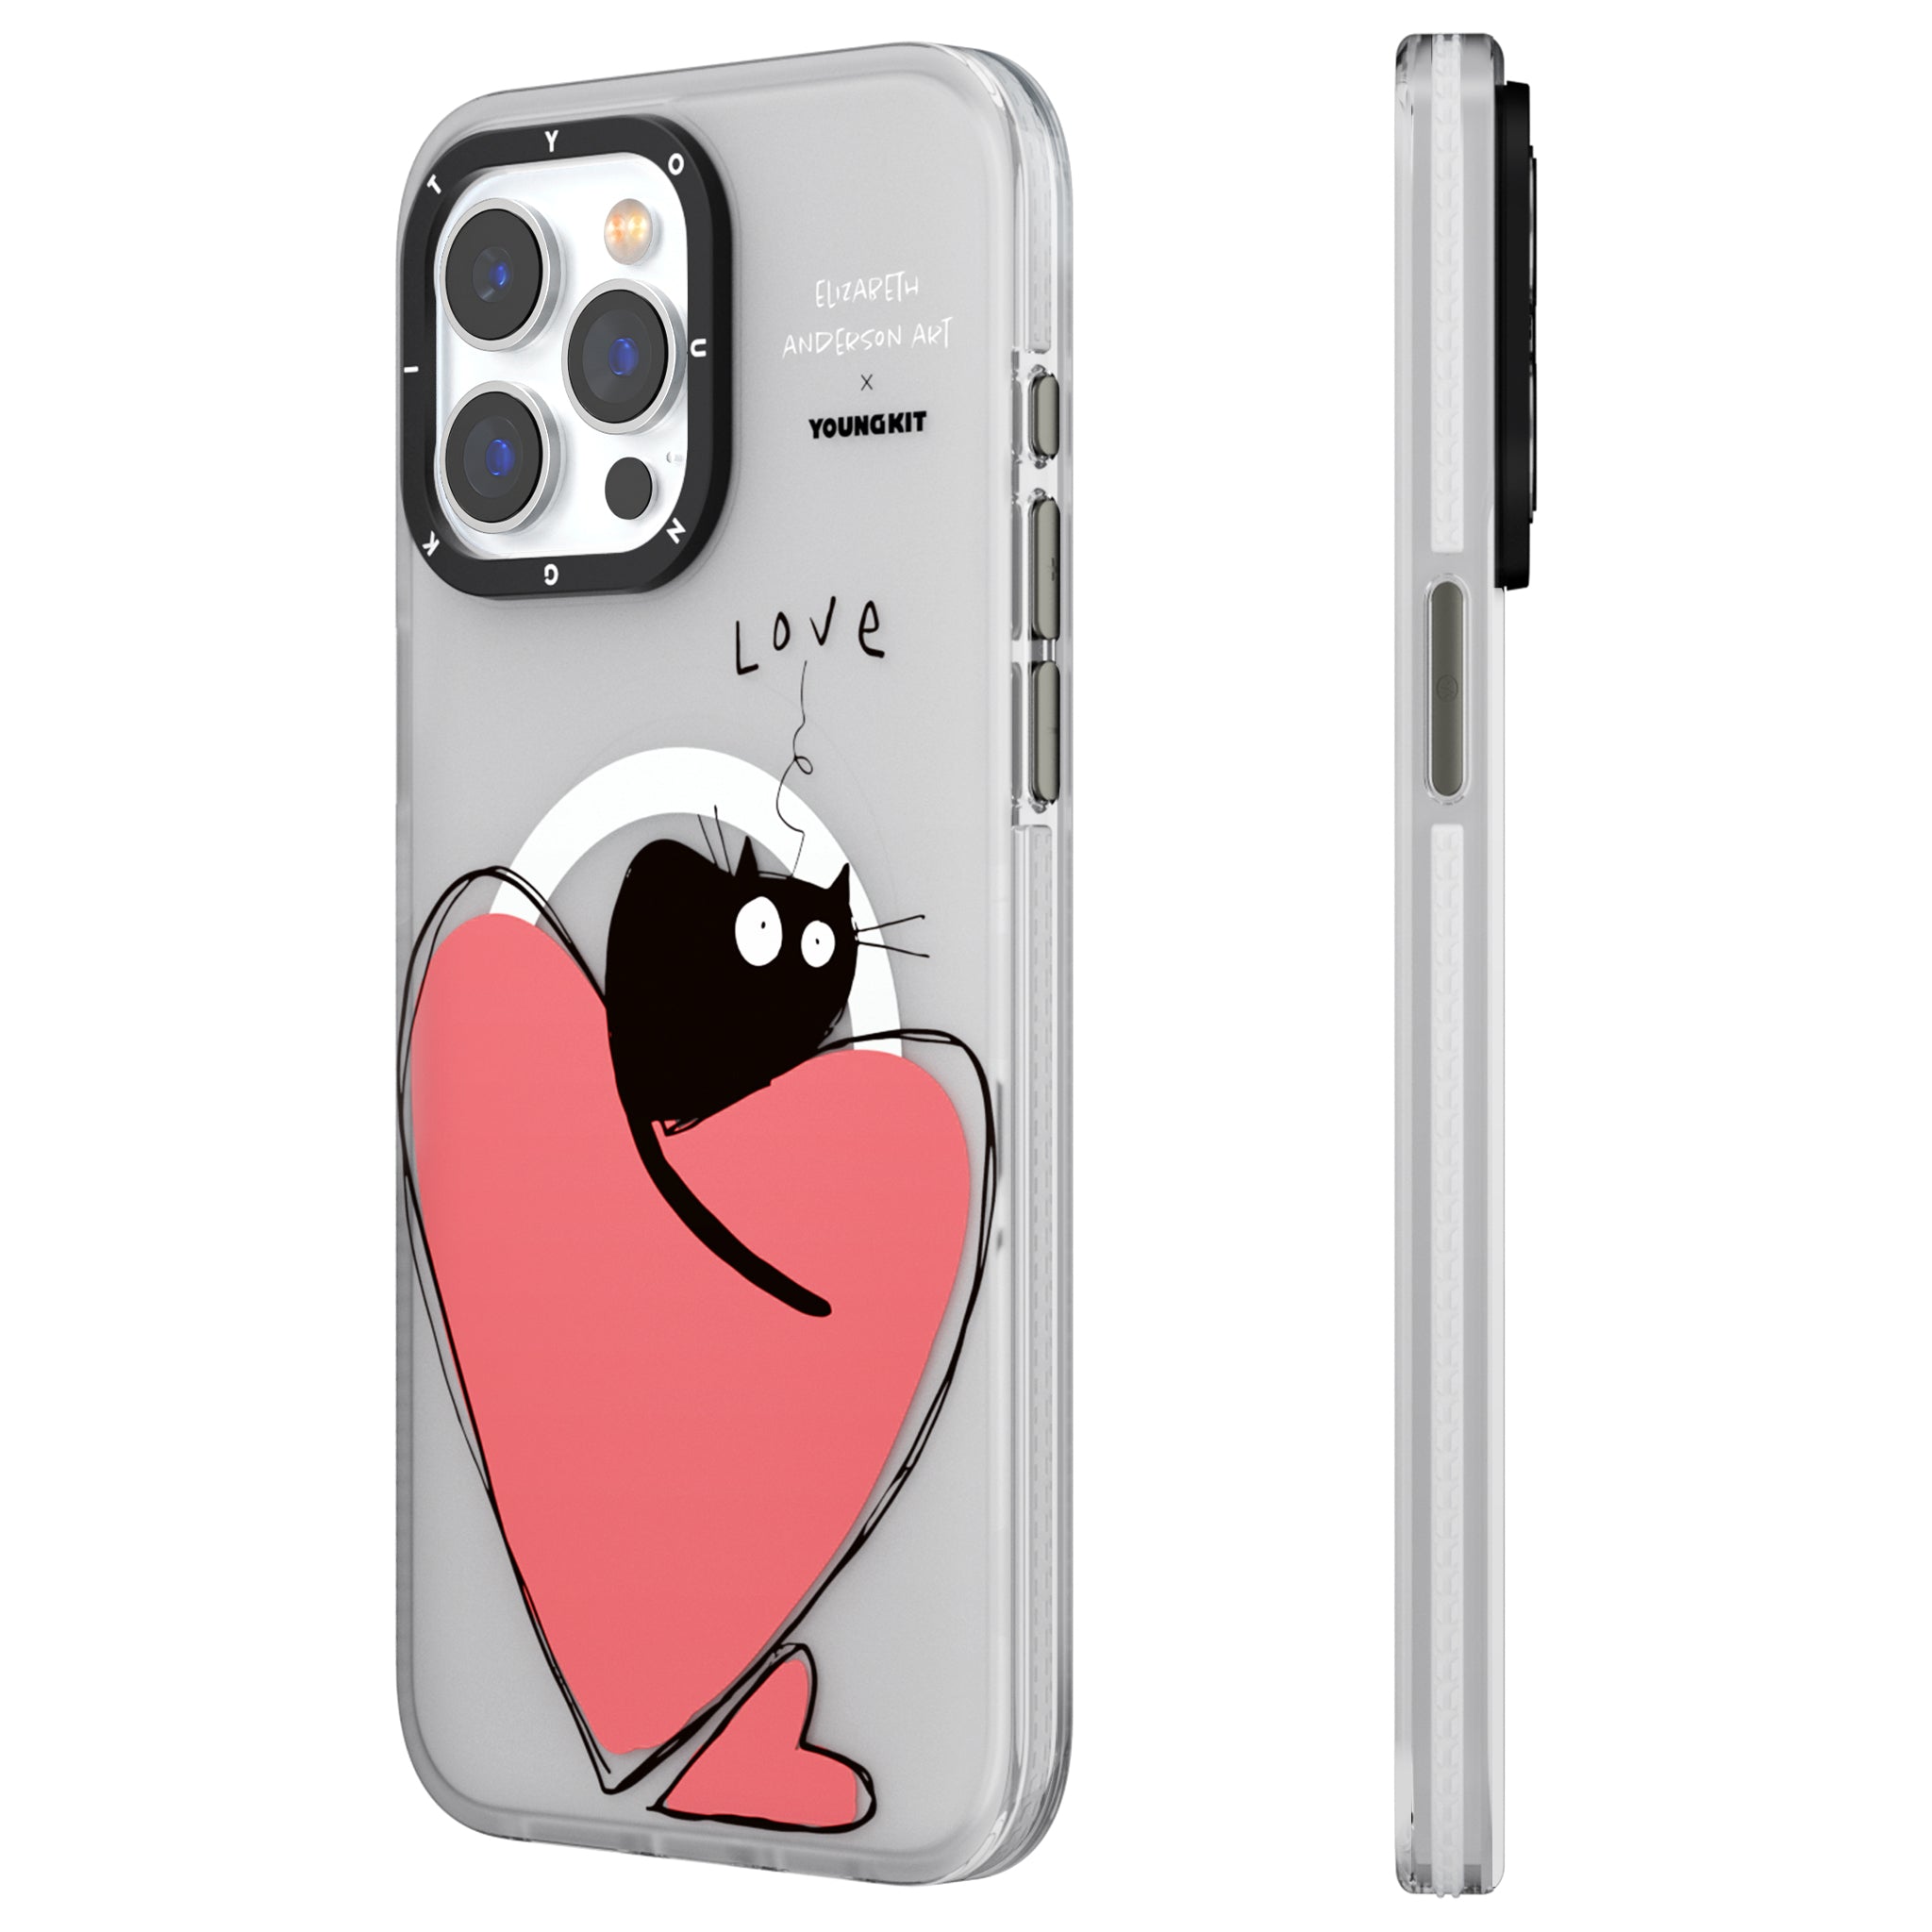 YOUNGKIT X Elizabeth Anderson Art MagSafe iPhone15 Case-Emotional Bond